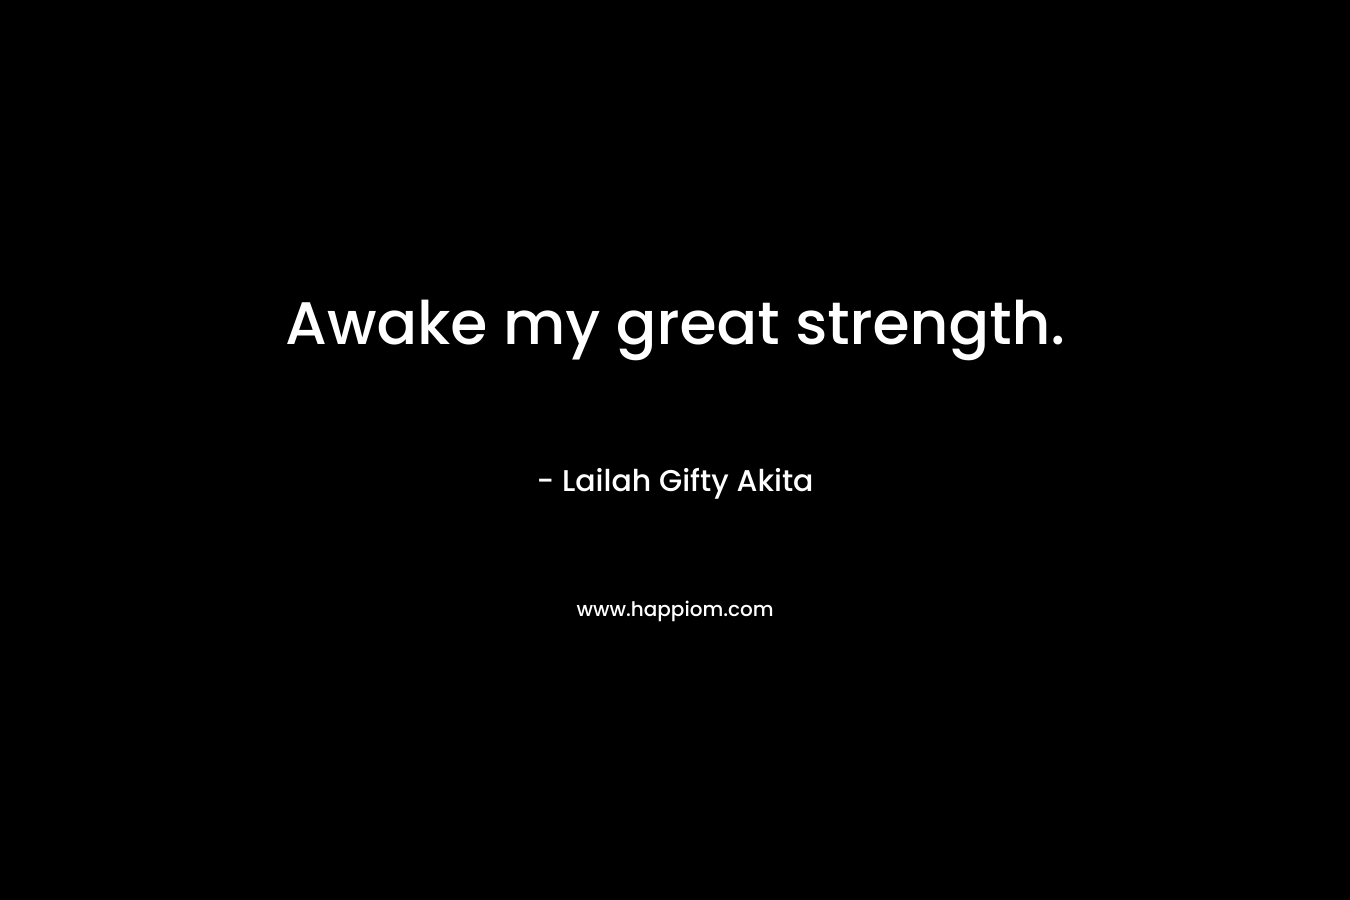 Awake my great strength.